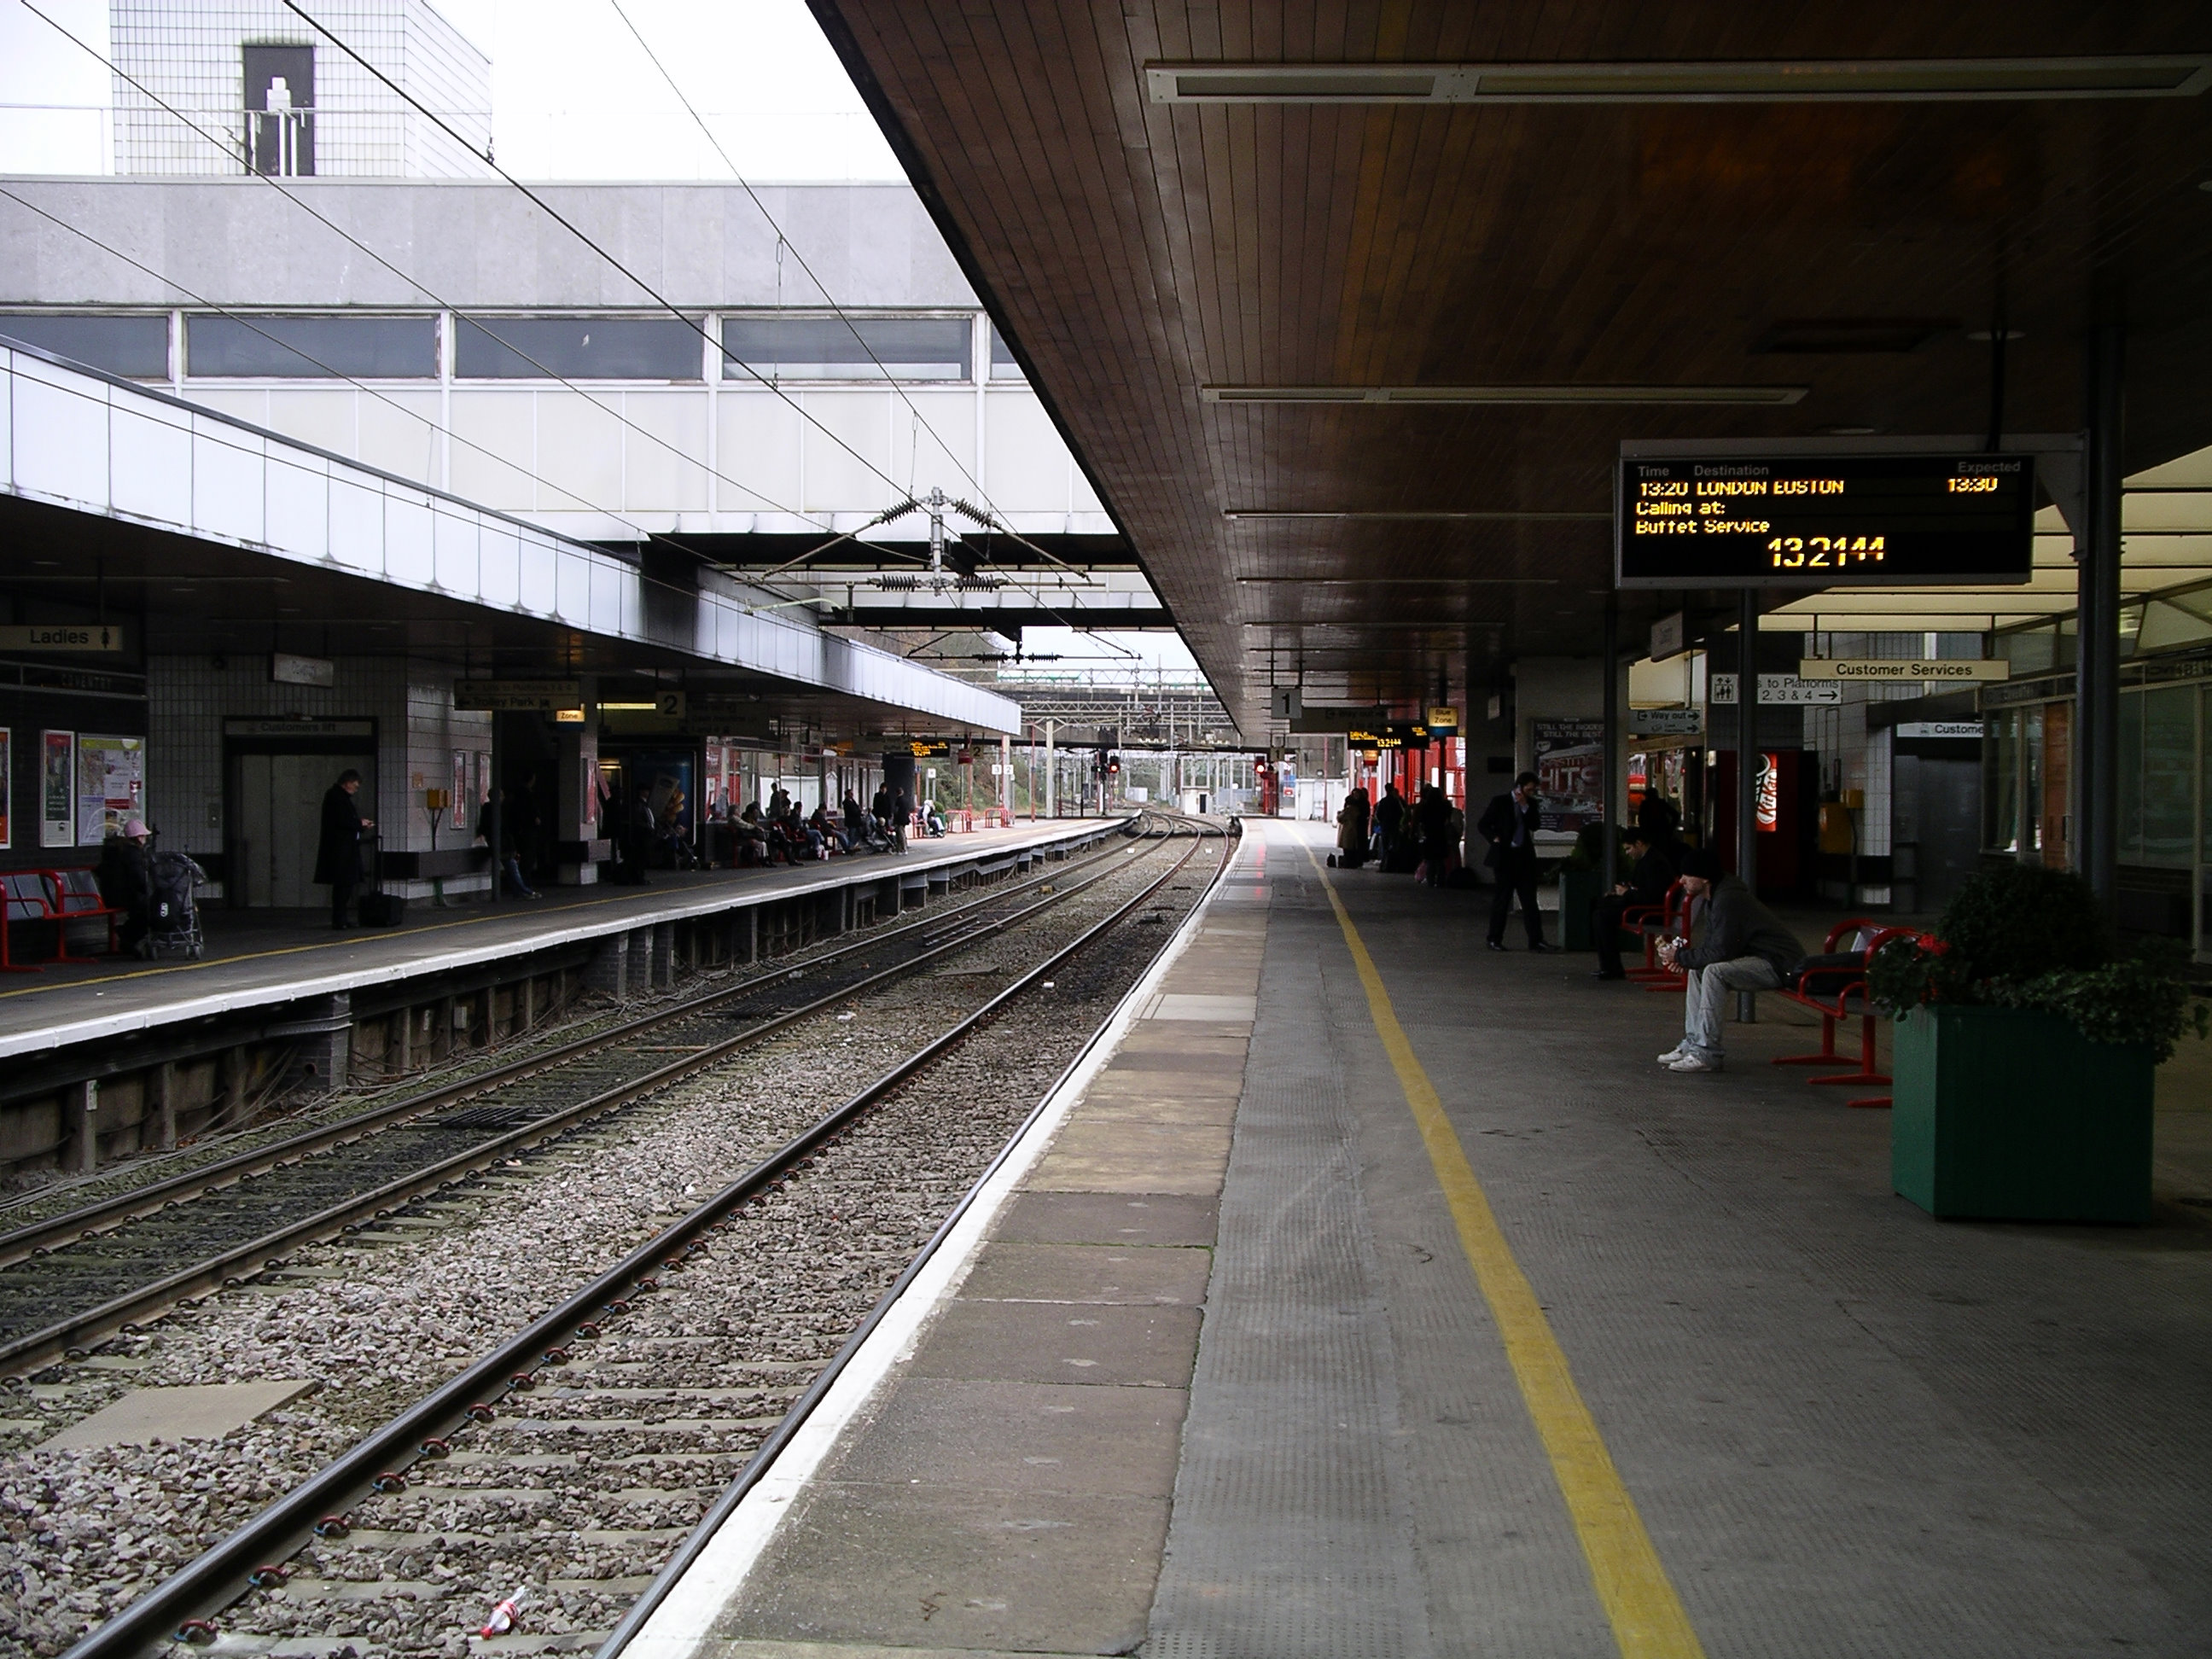 Coventry_railway_station-platform_1-14d06.jpg